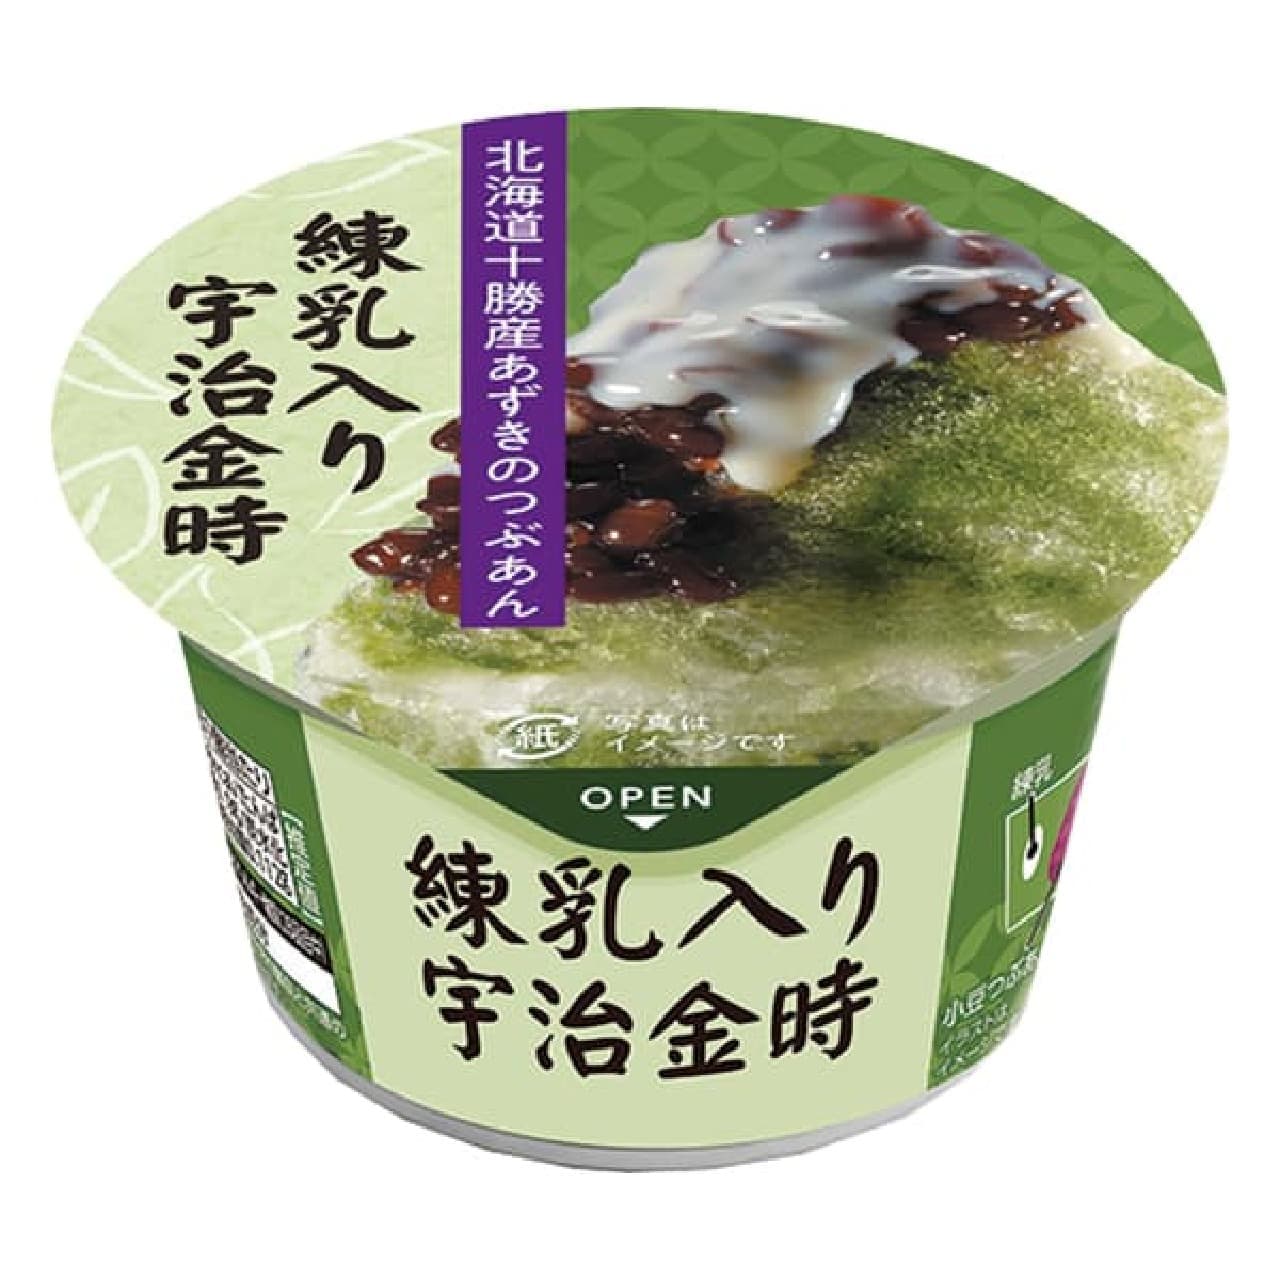 FamilyMart "Akagi: Ujikintoki with condensed milk